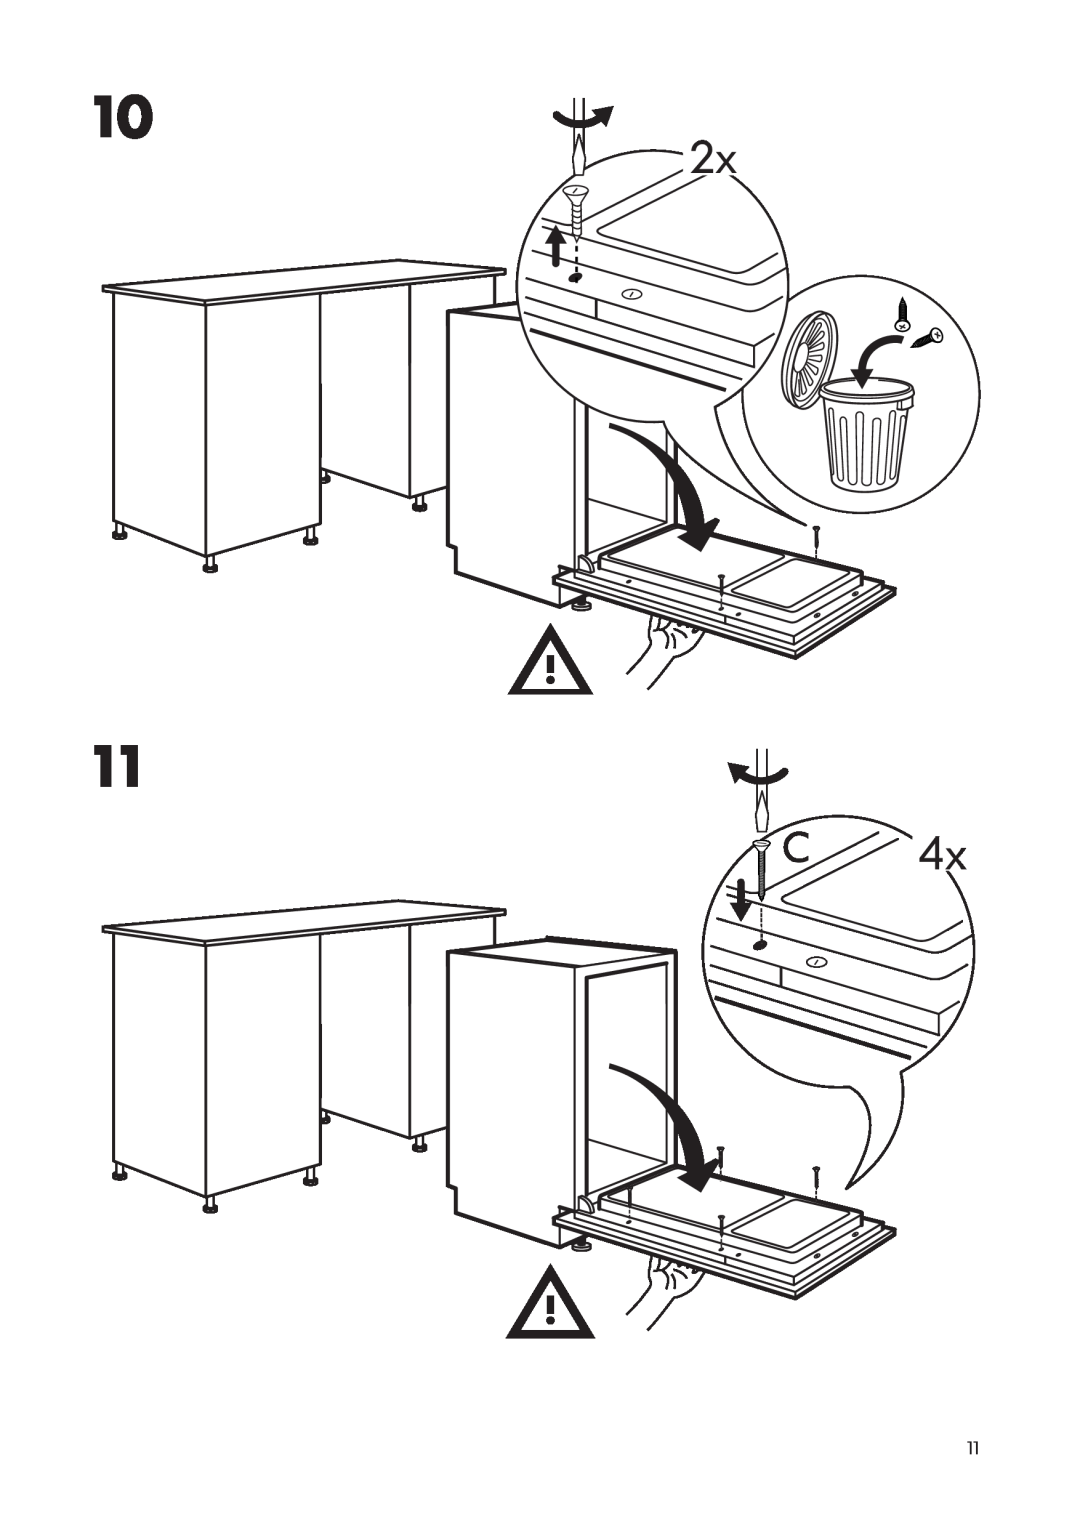 IKEA DW60 manual 2x 4x 